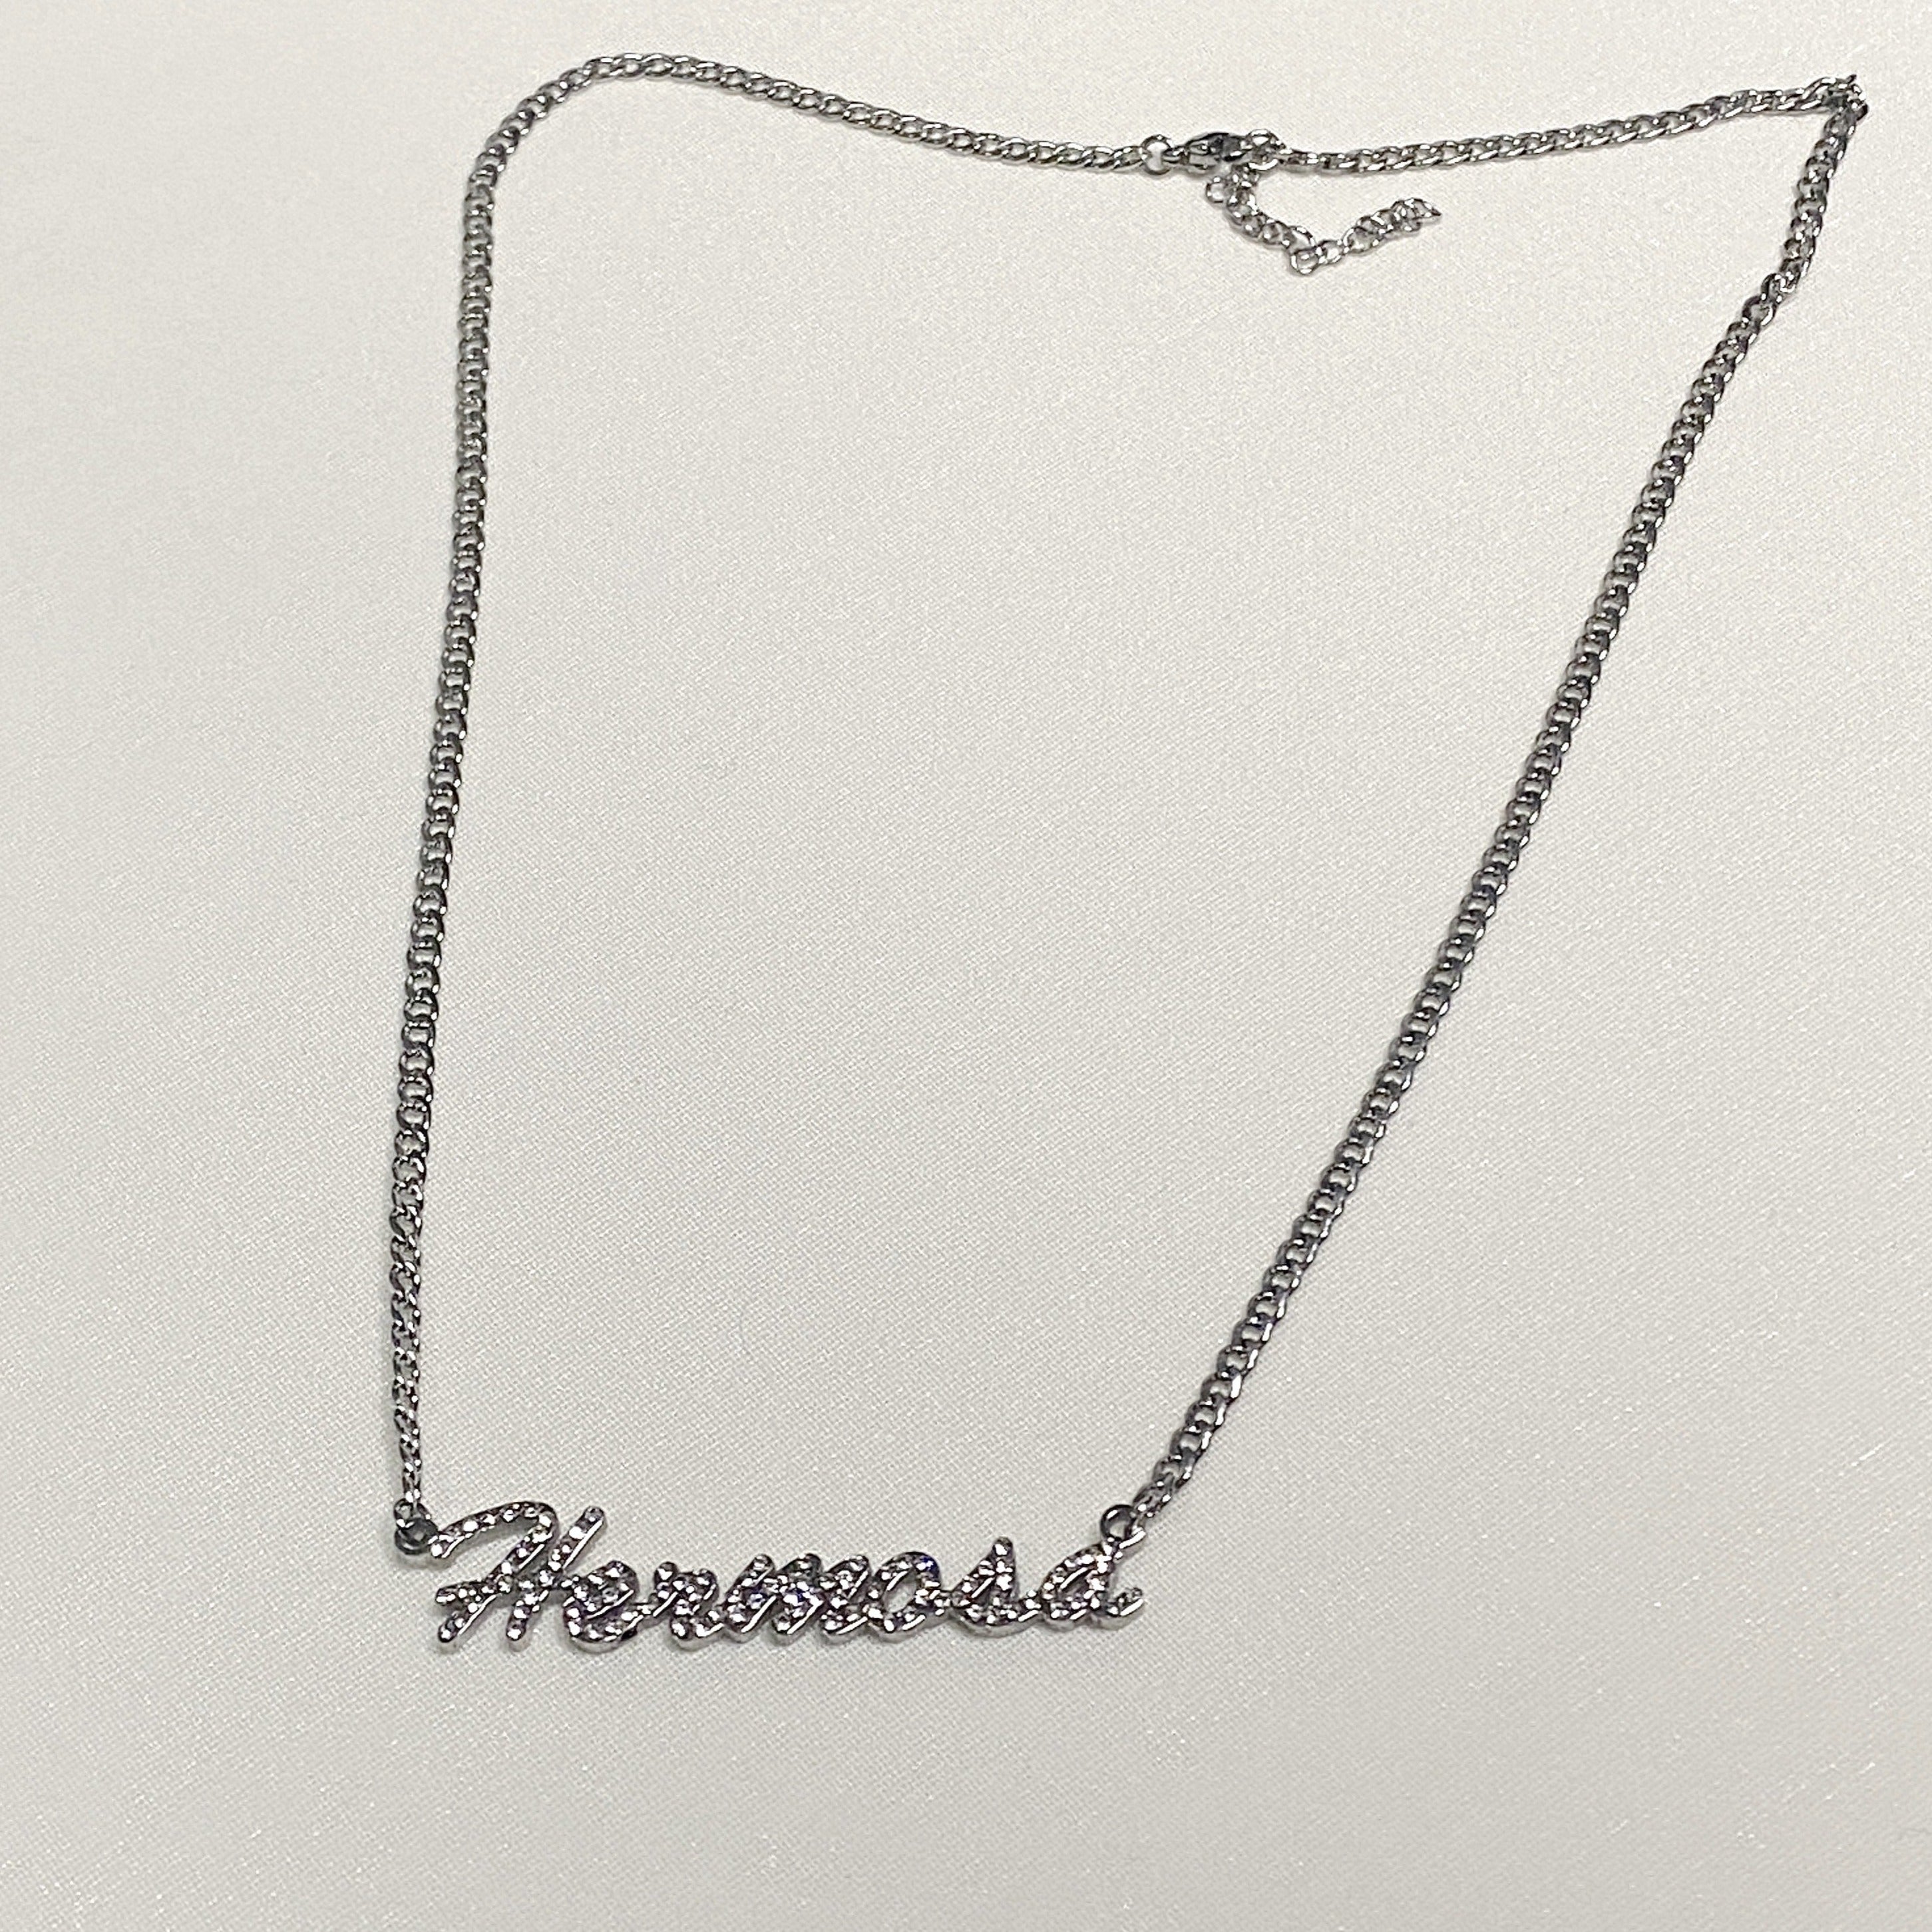 Hermosa (beautiful) Necklace